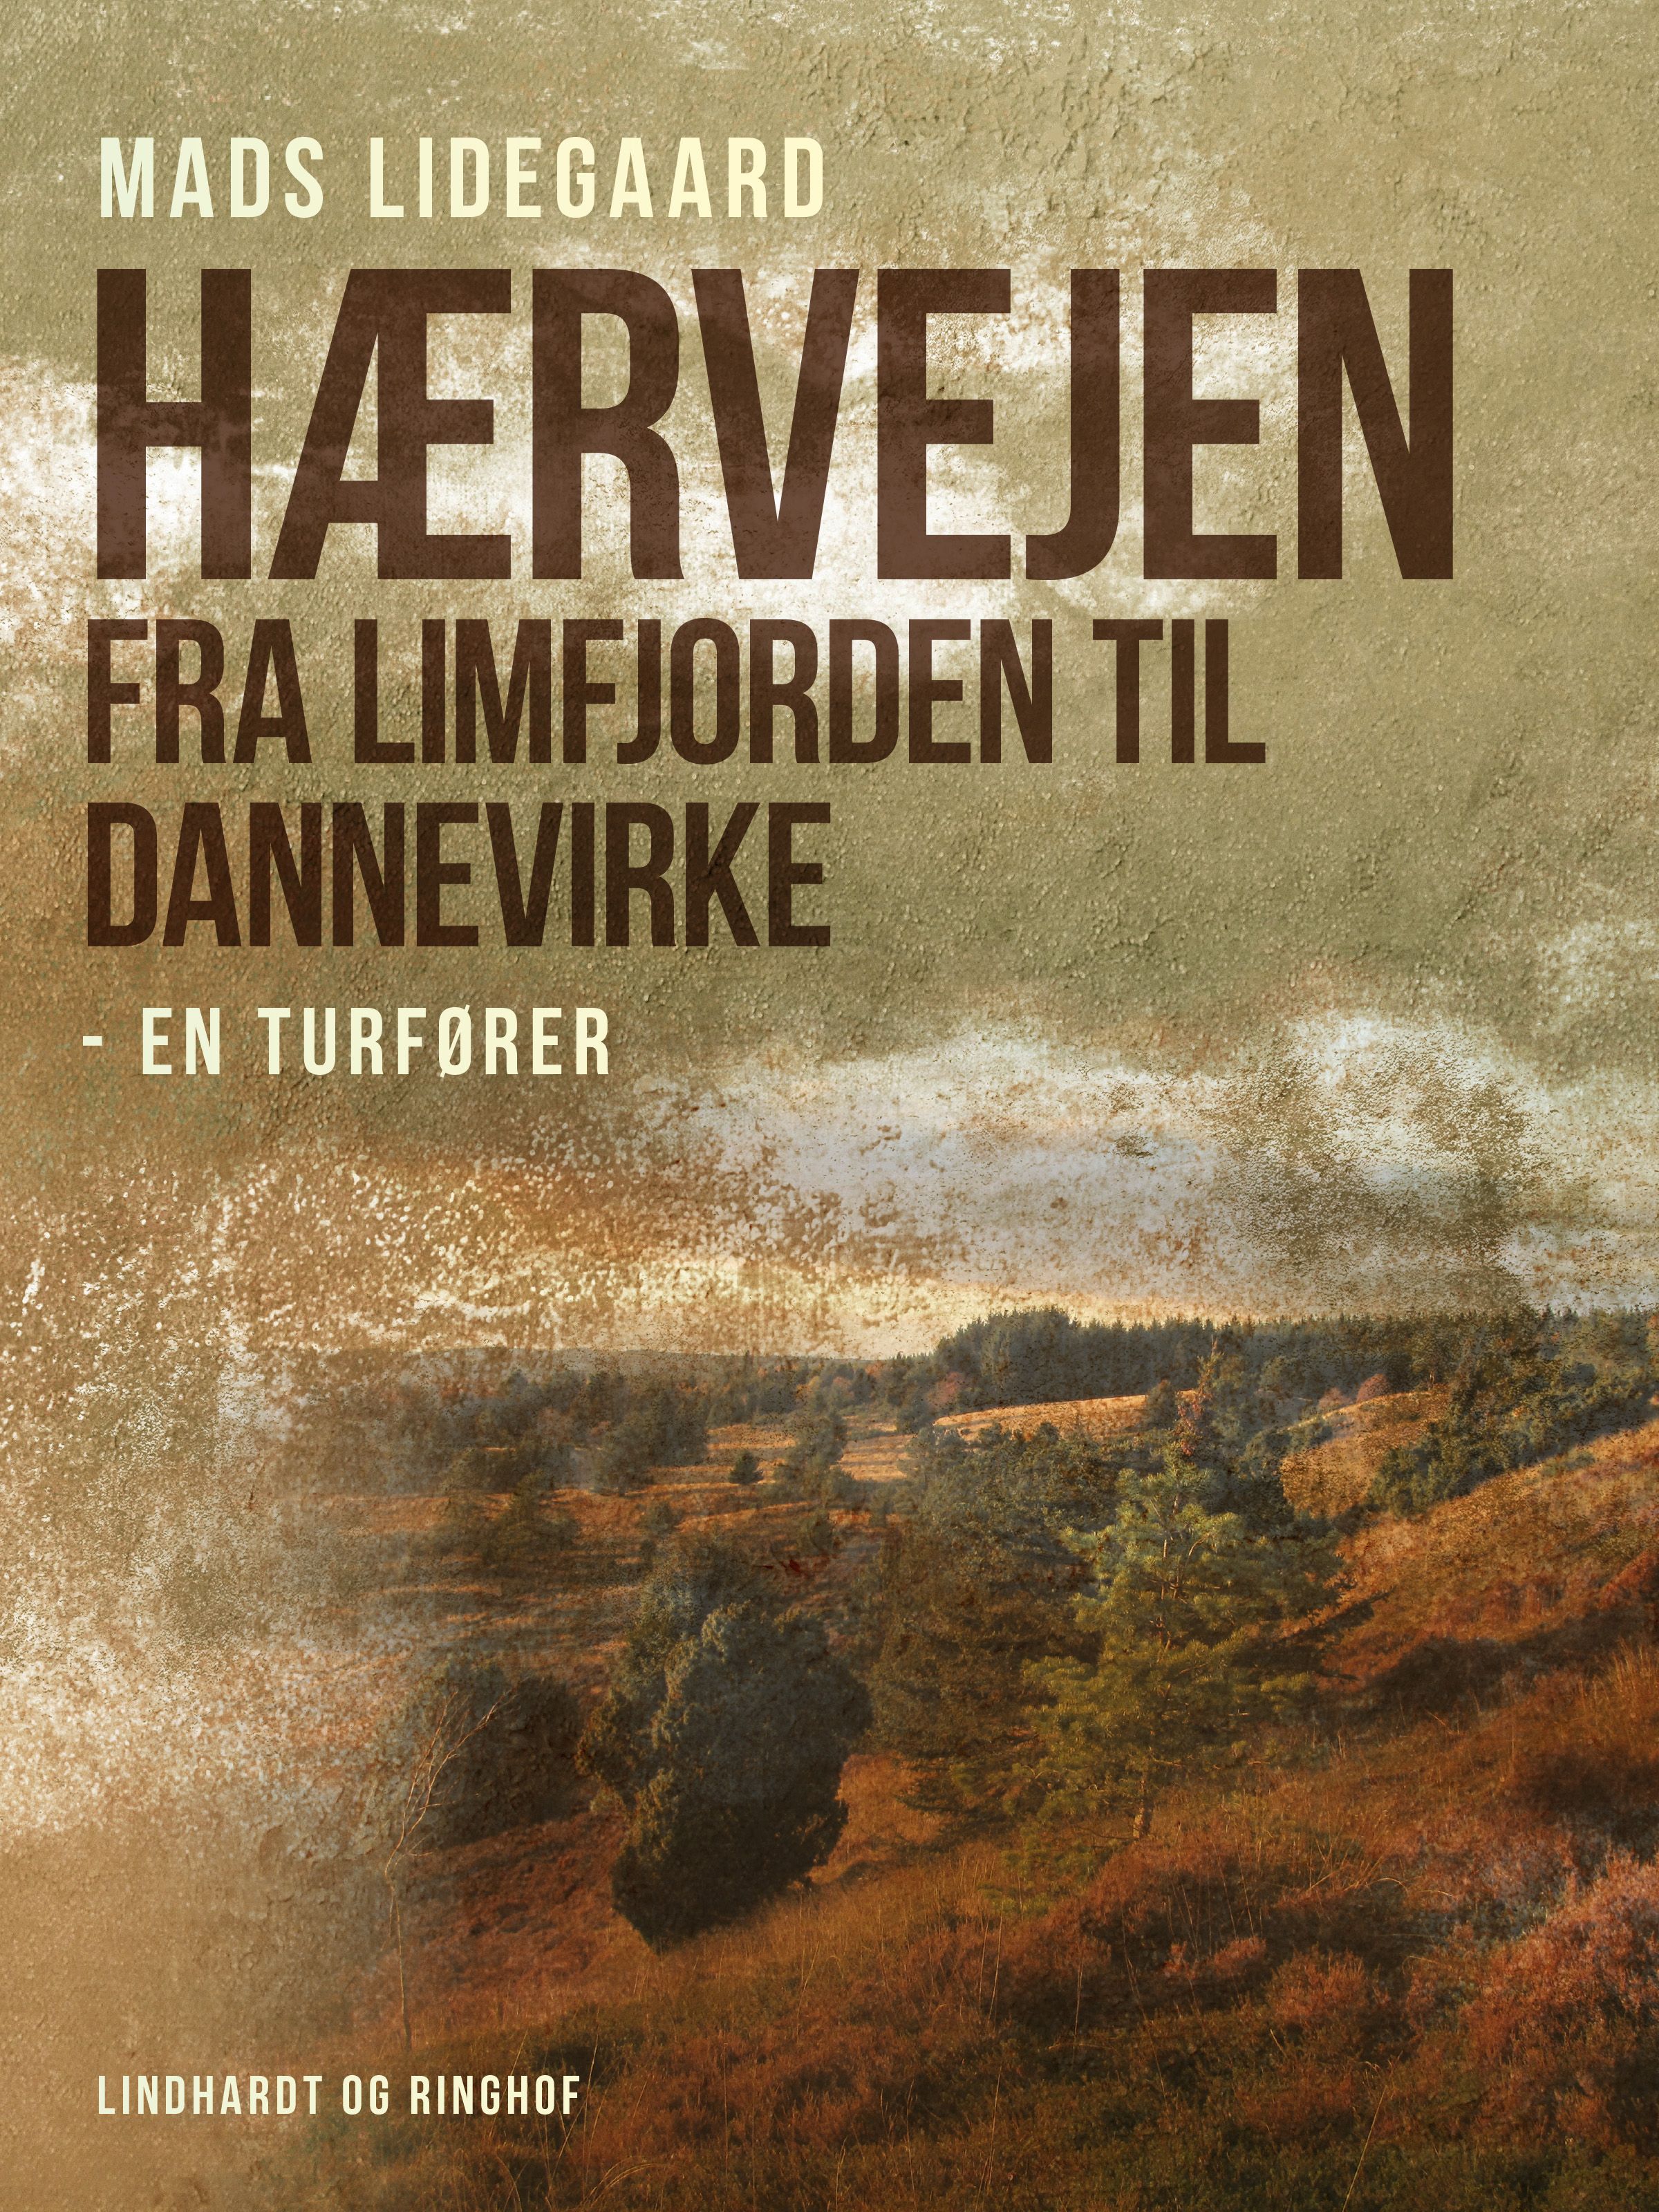 Hærvejen fra Limfjorden til Dannevirke – en turfører, e-bok av Mads Lidegaard